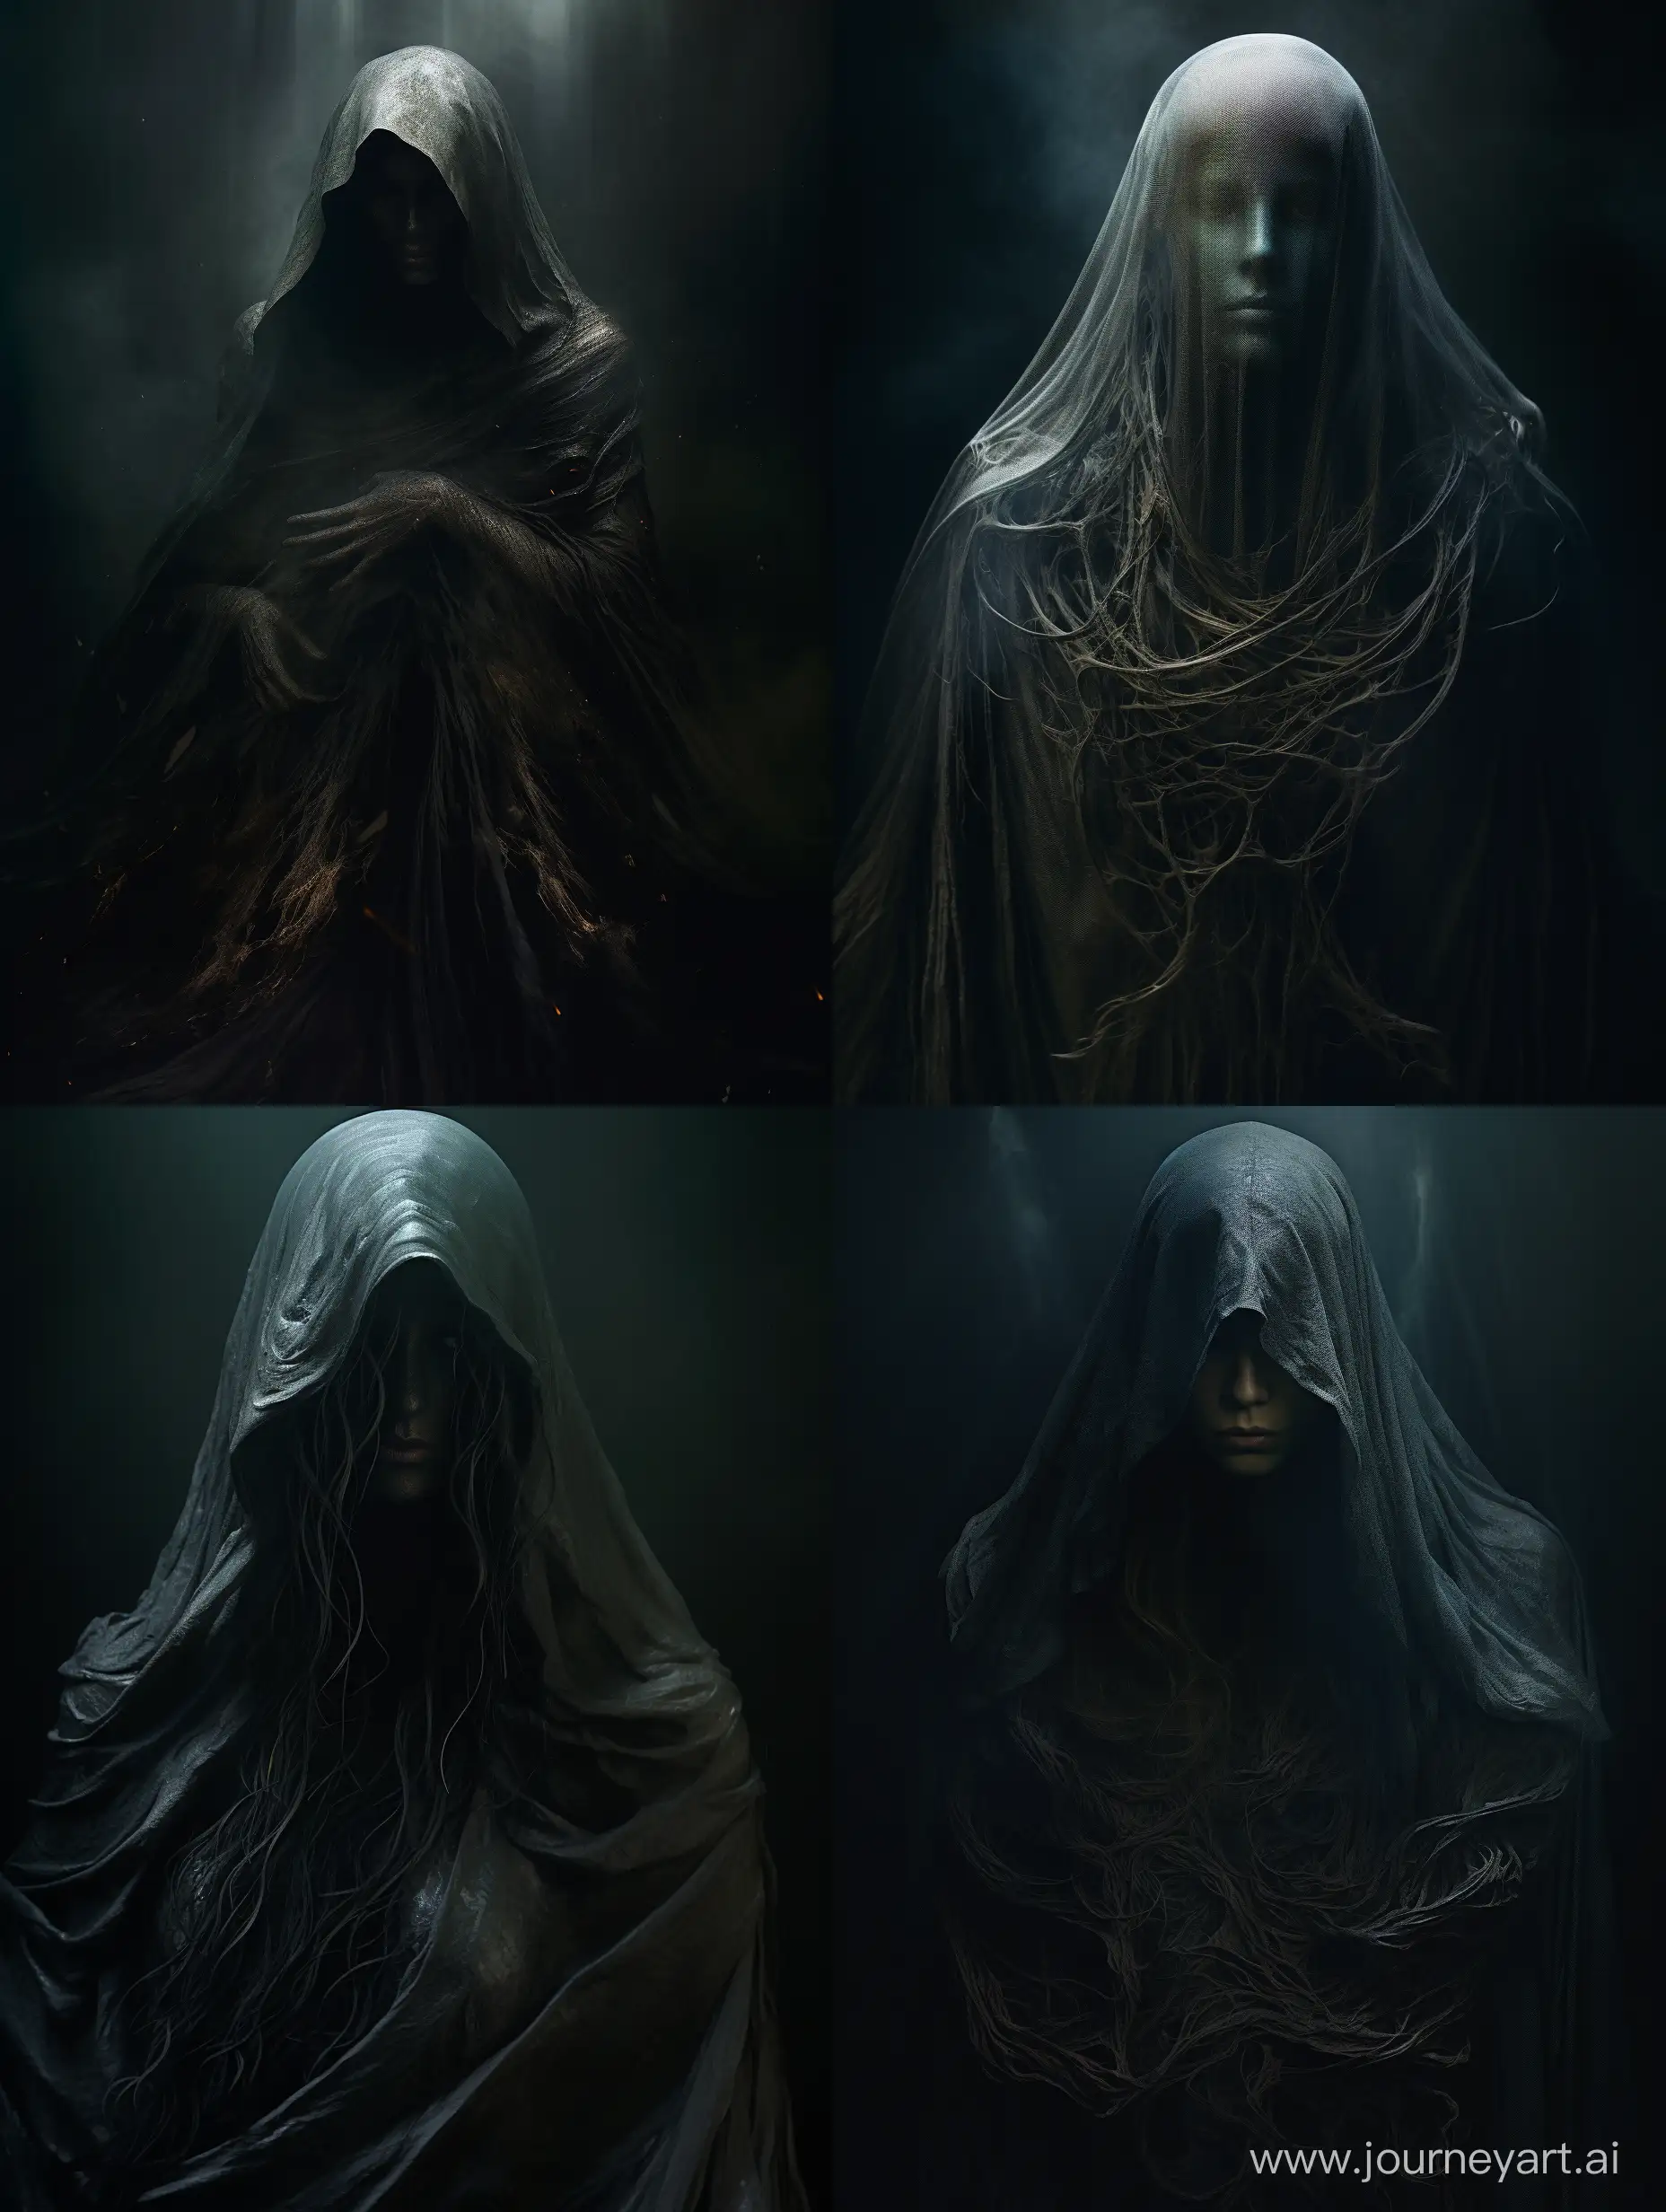 Eerie-Portrait-of-a-Dark-Spirit-with-Intricate-Cloak-Details